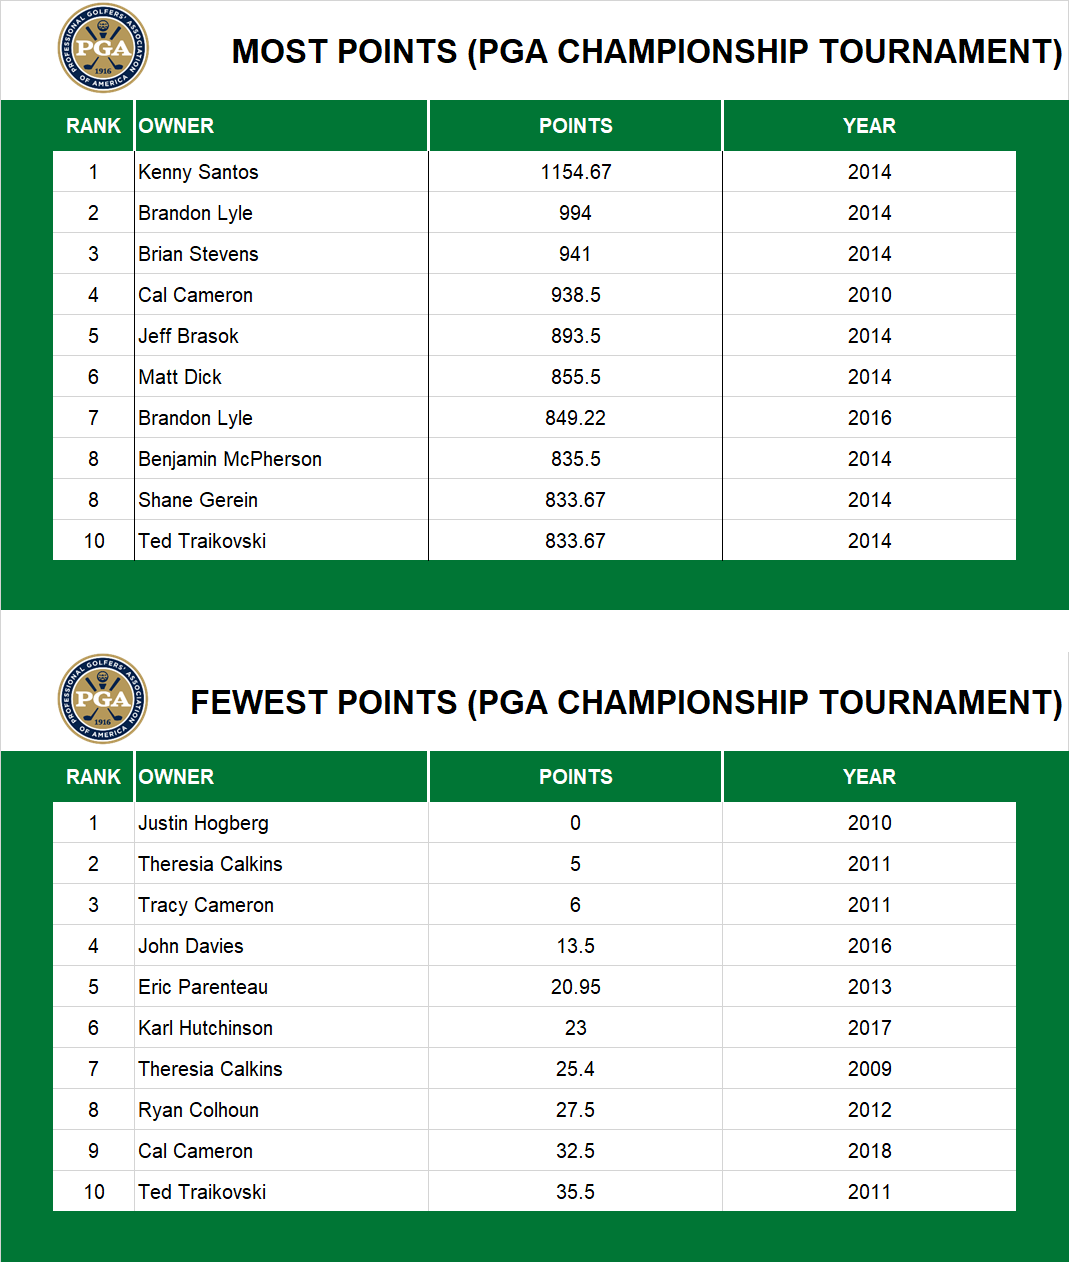 Points in a PGA Championship Tournament (Pre-2019)